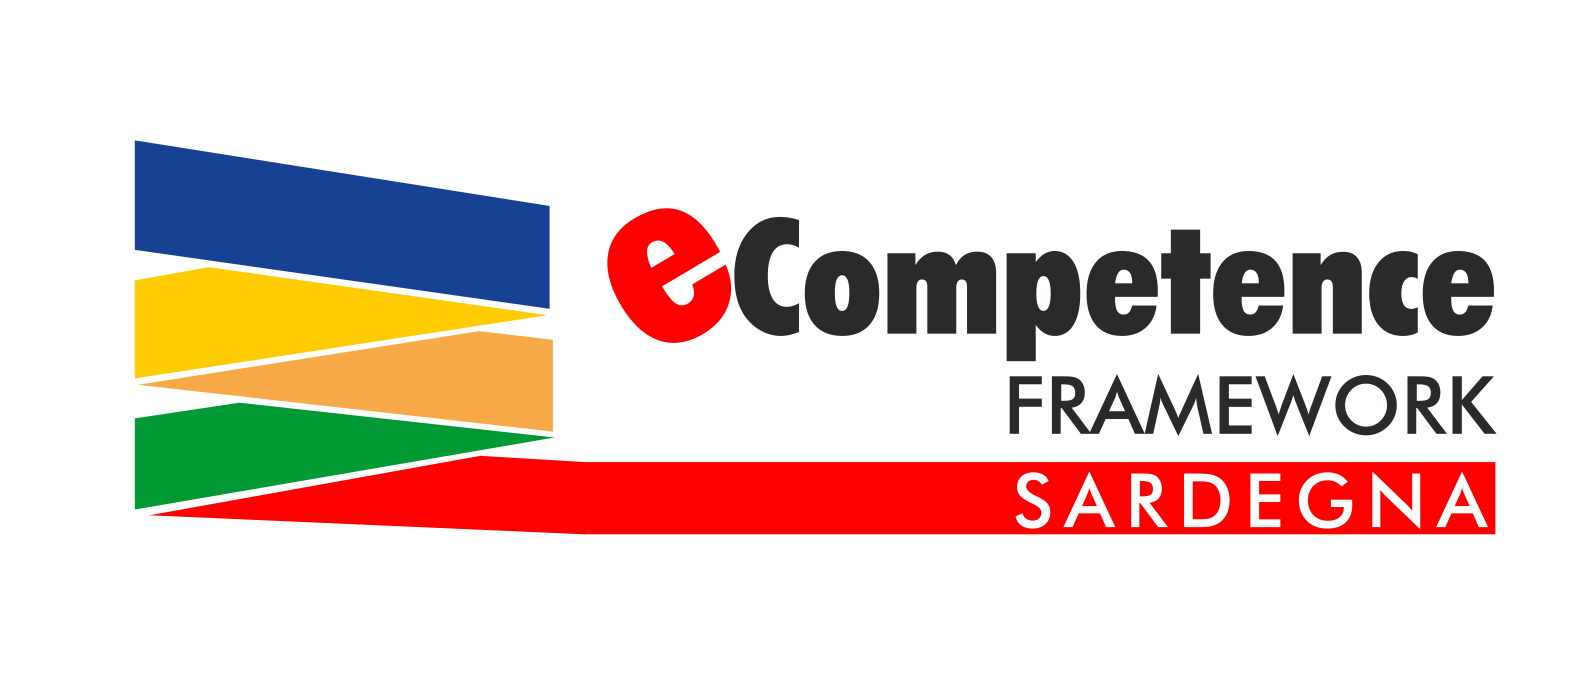 e-competence framework